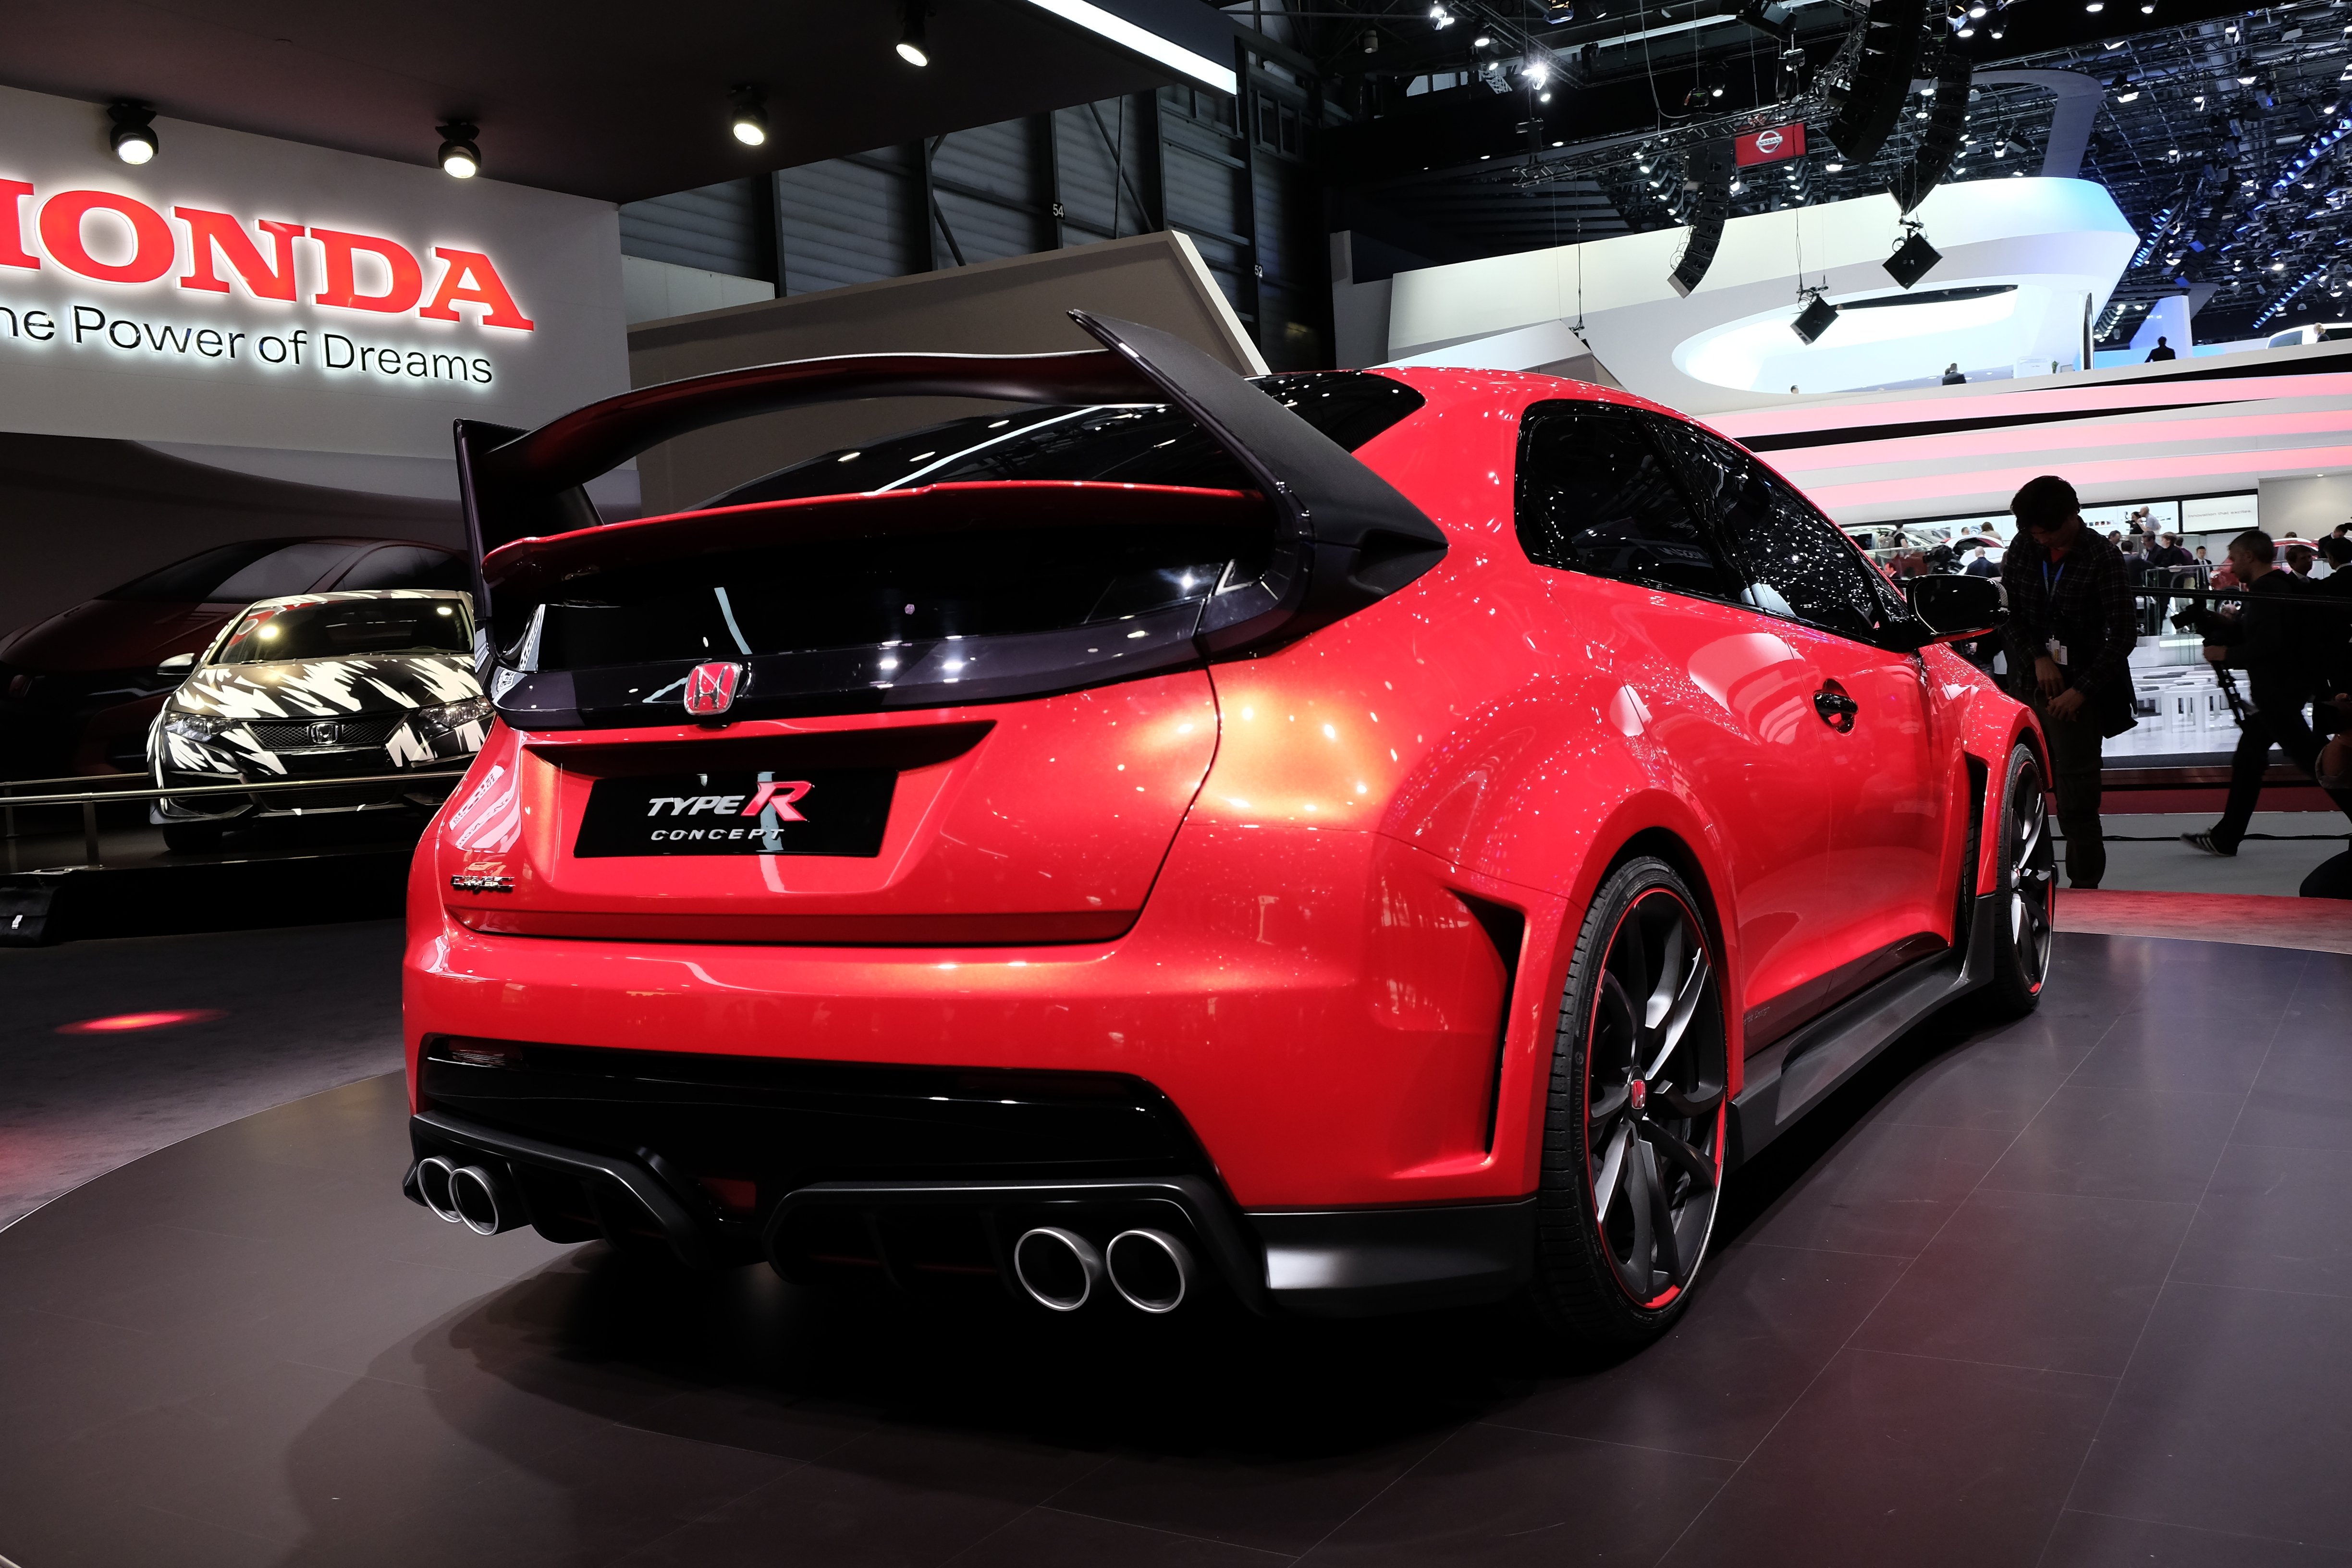 New type r. Honda Civic Type r 2014. Хонда Сивик тайп р 2014. Honda Civic Type r Concept 2015. Новая Honda Civic Type r.